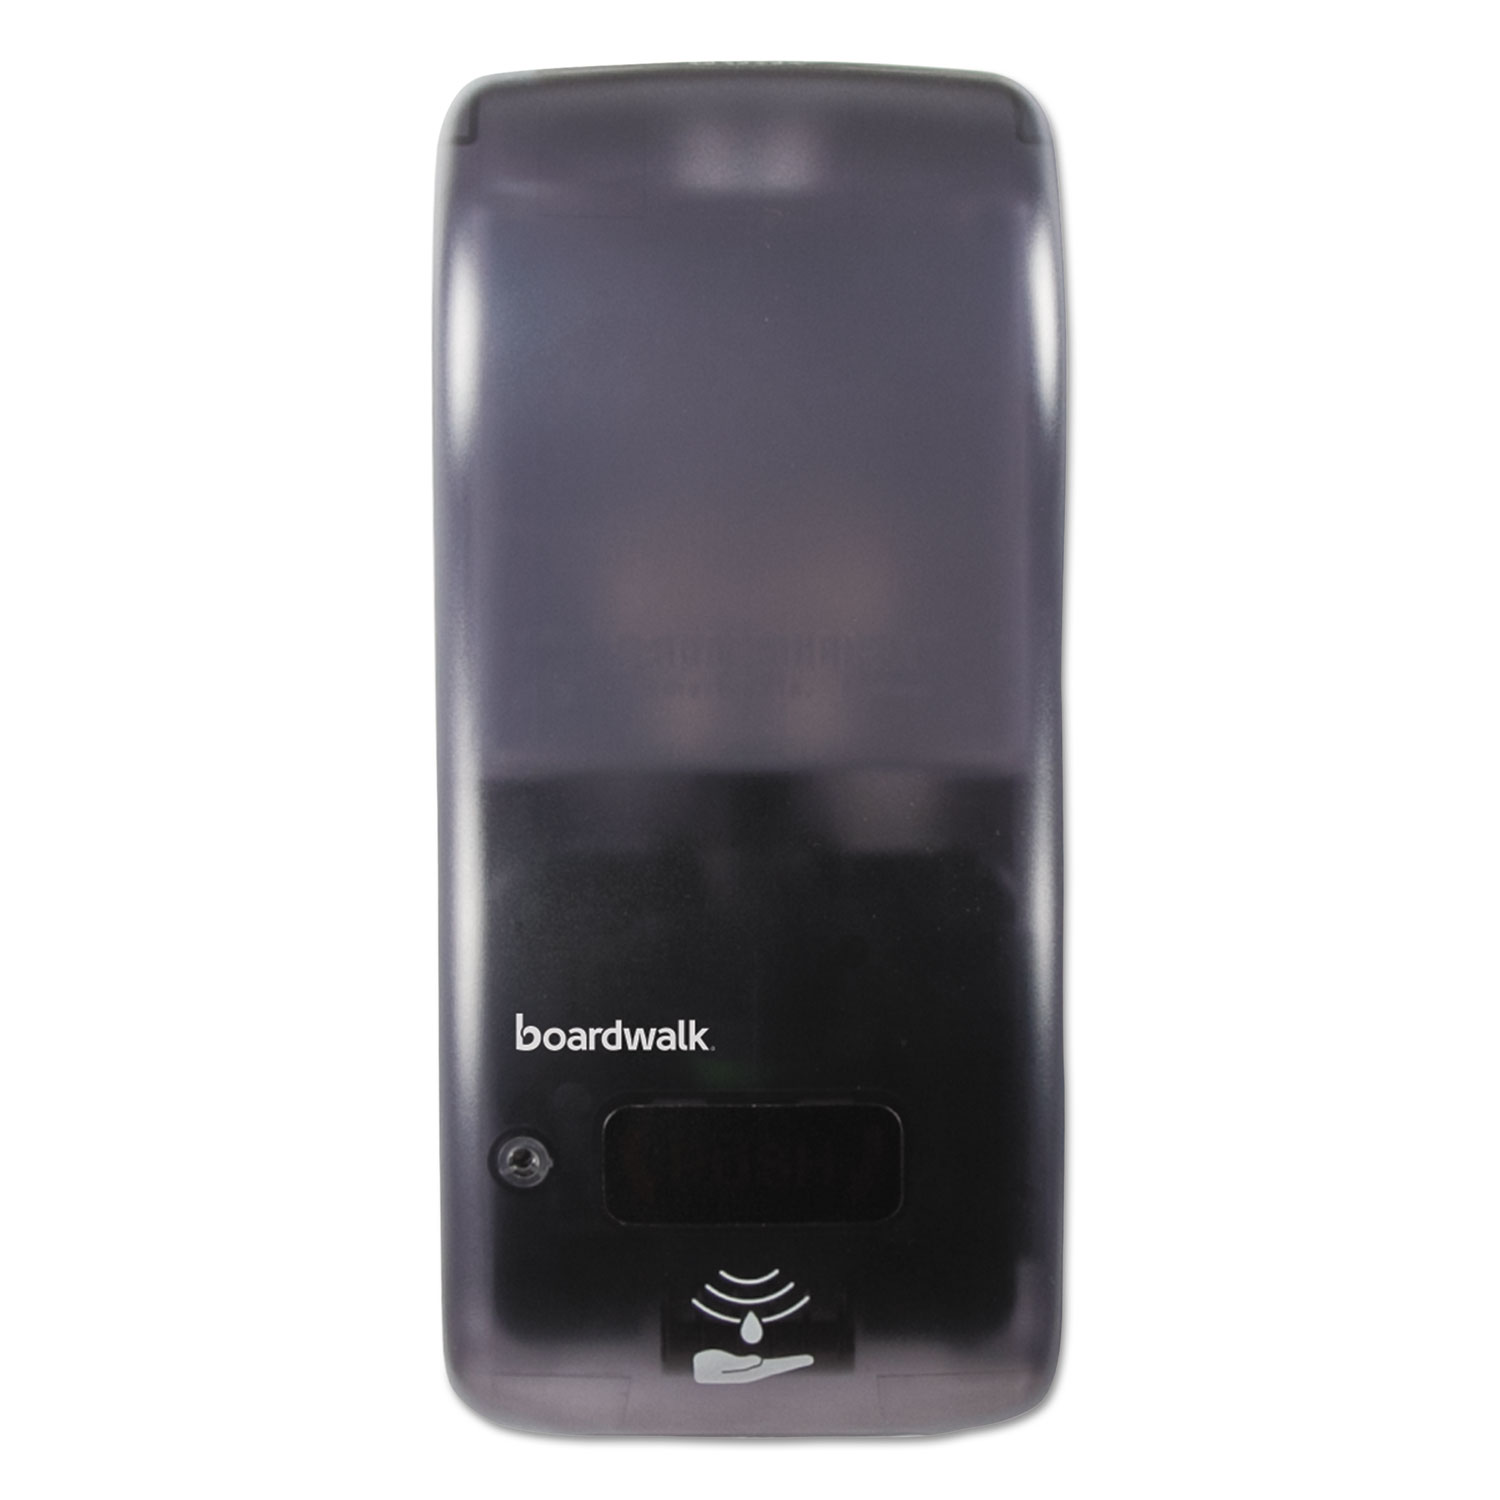  Boardwalk SHF900SBBW Rely Hybrid Foam Soap Dispenser, 900 mL, 5.25 x 4 x 12, Black Pearl (BWKSHF900SBBW) 